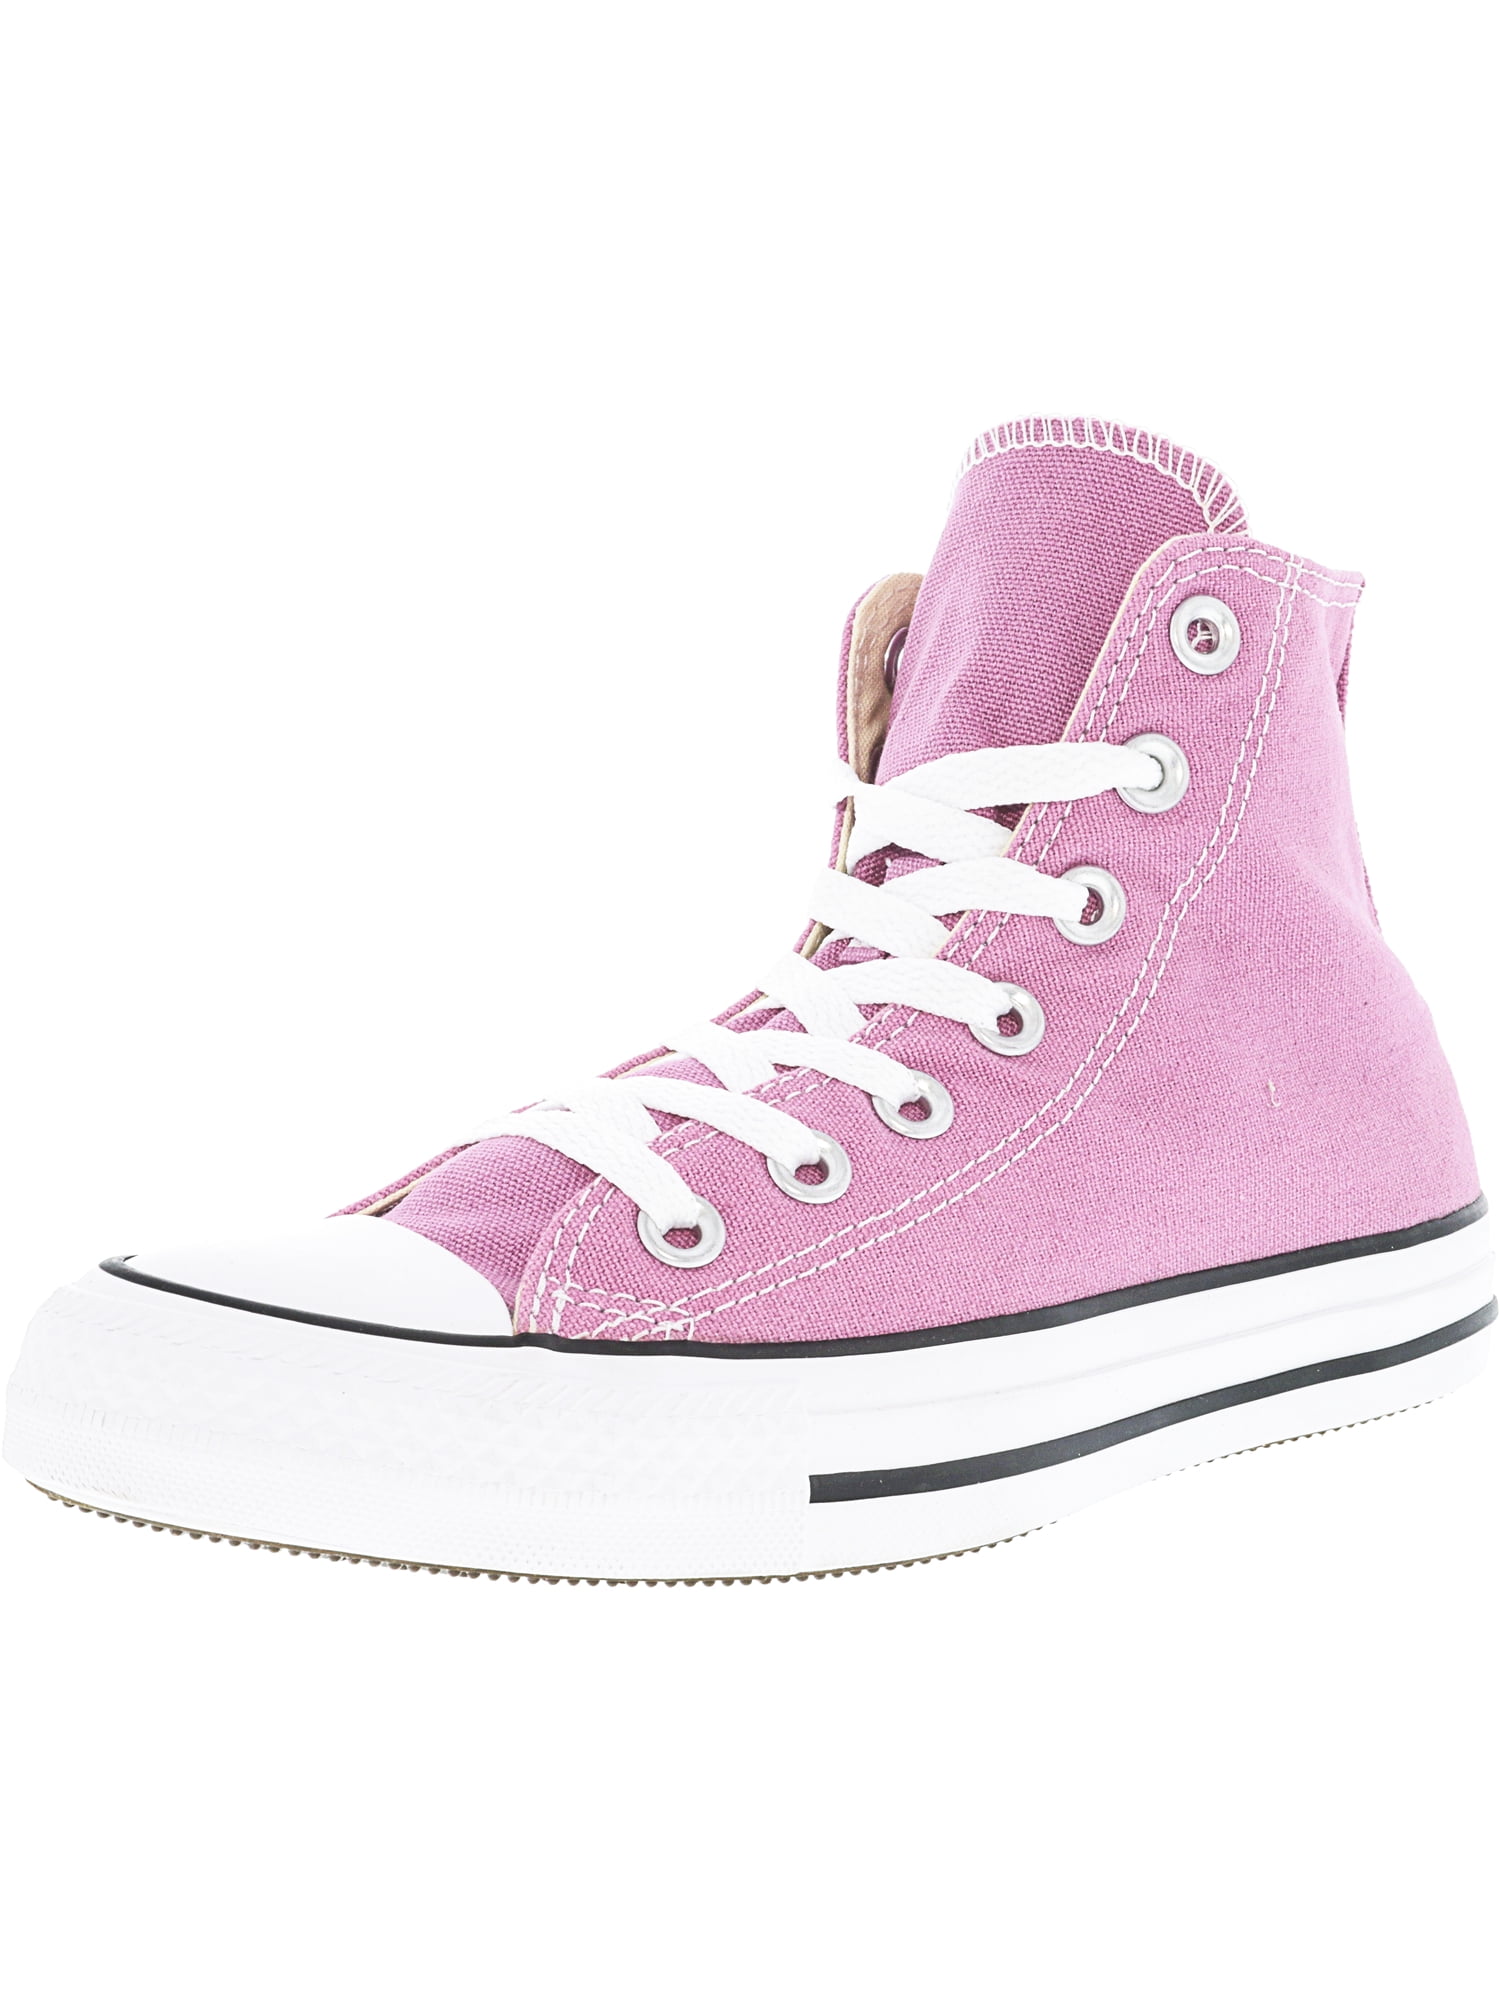 powder pink converse